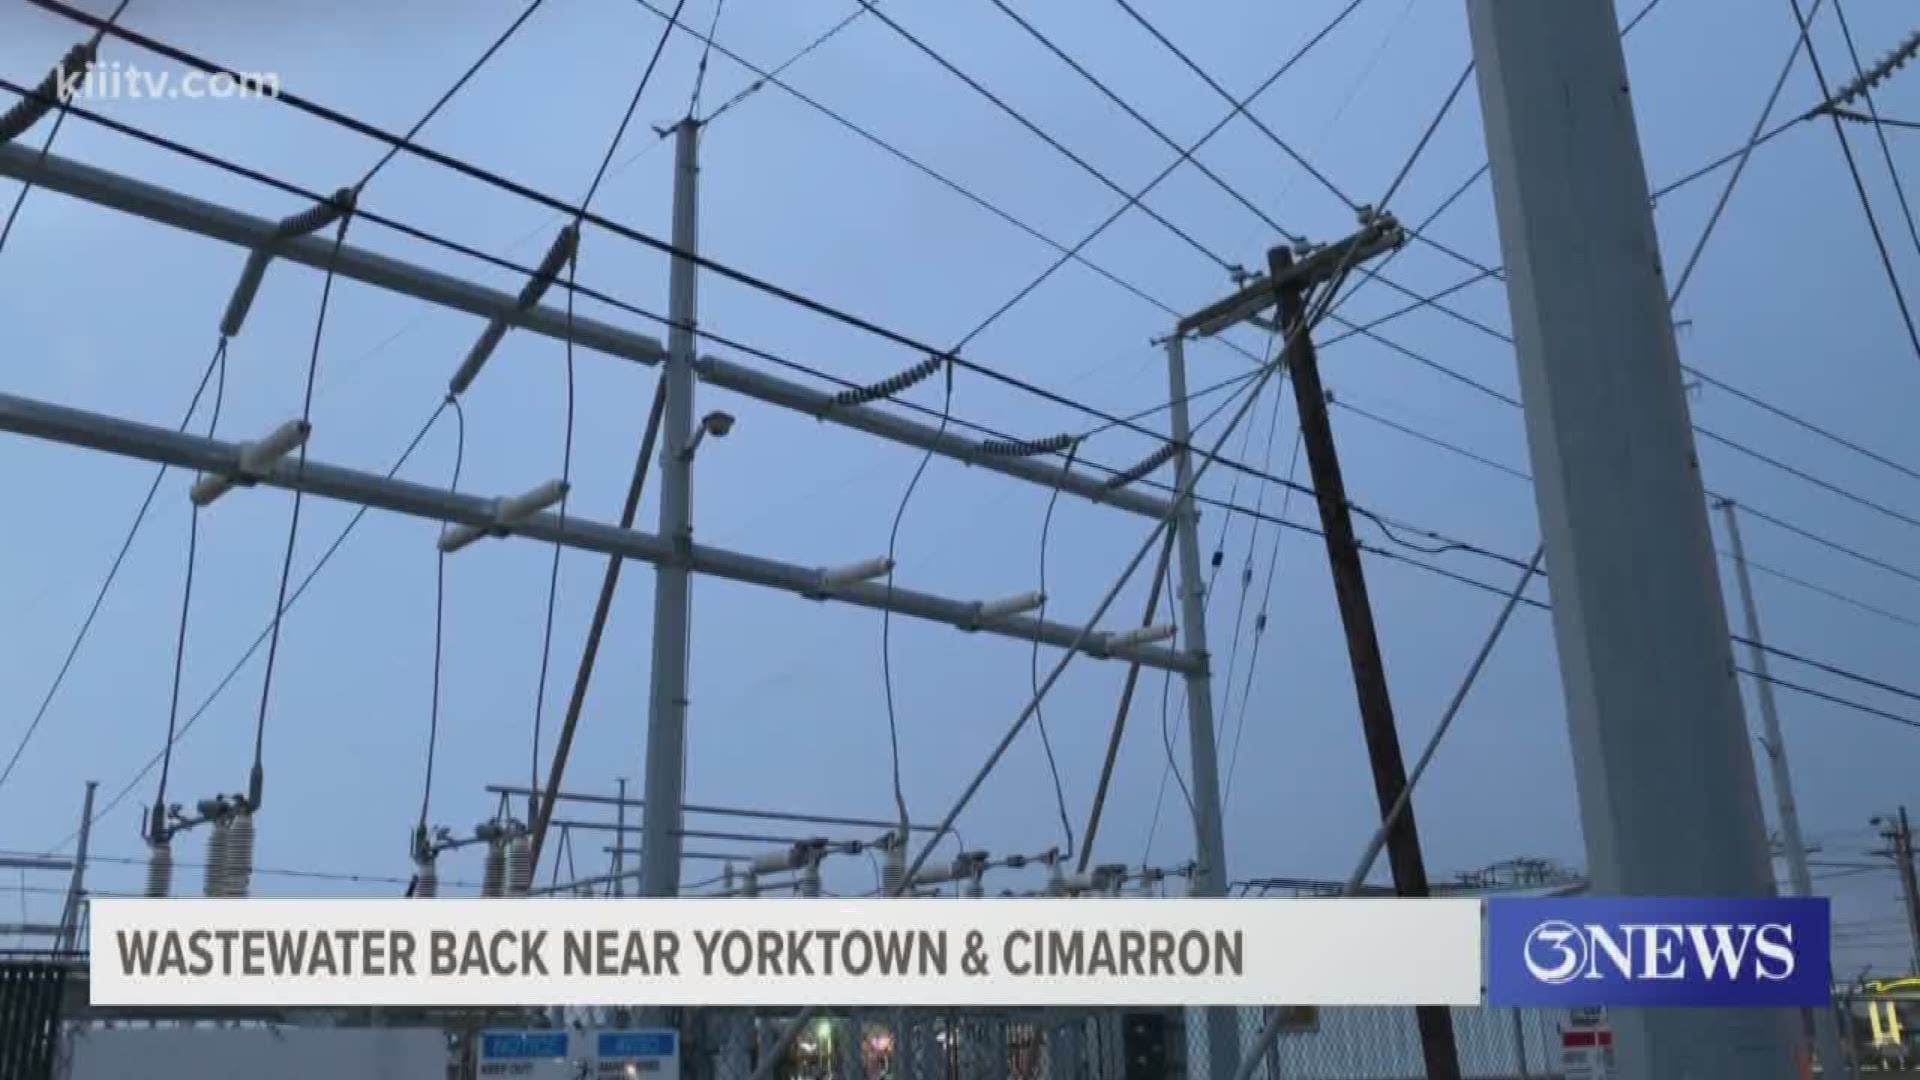 A power surge knocked some wastewater pumps offline near Yorktown and Cimarron.